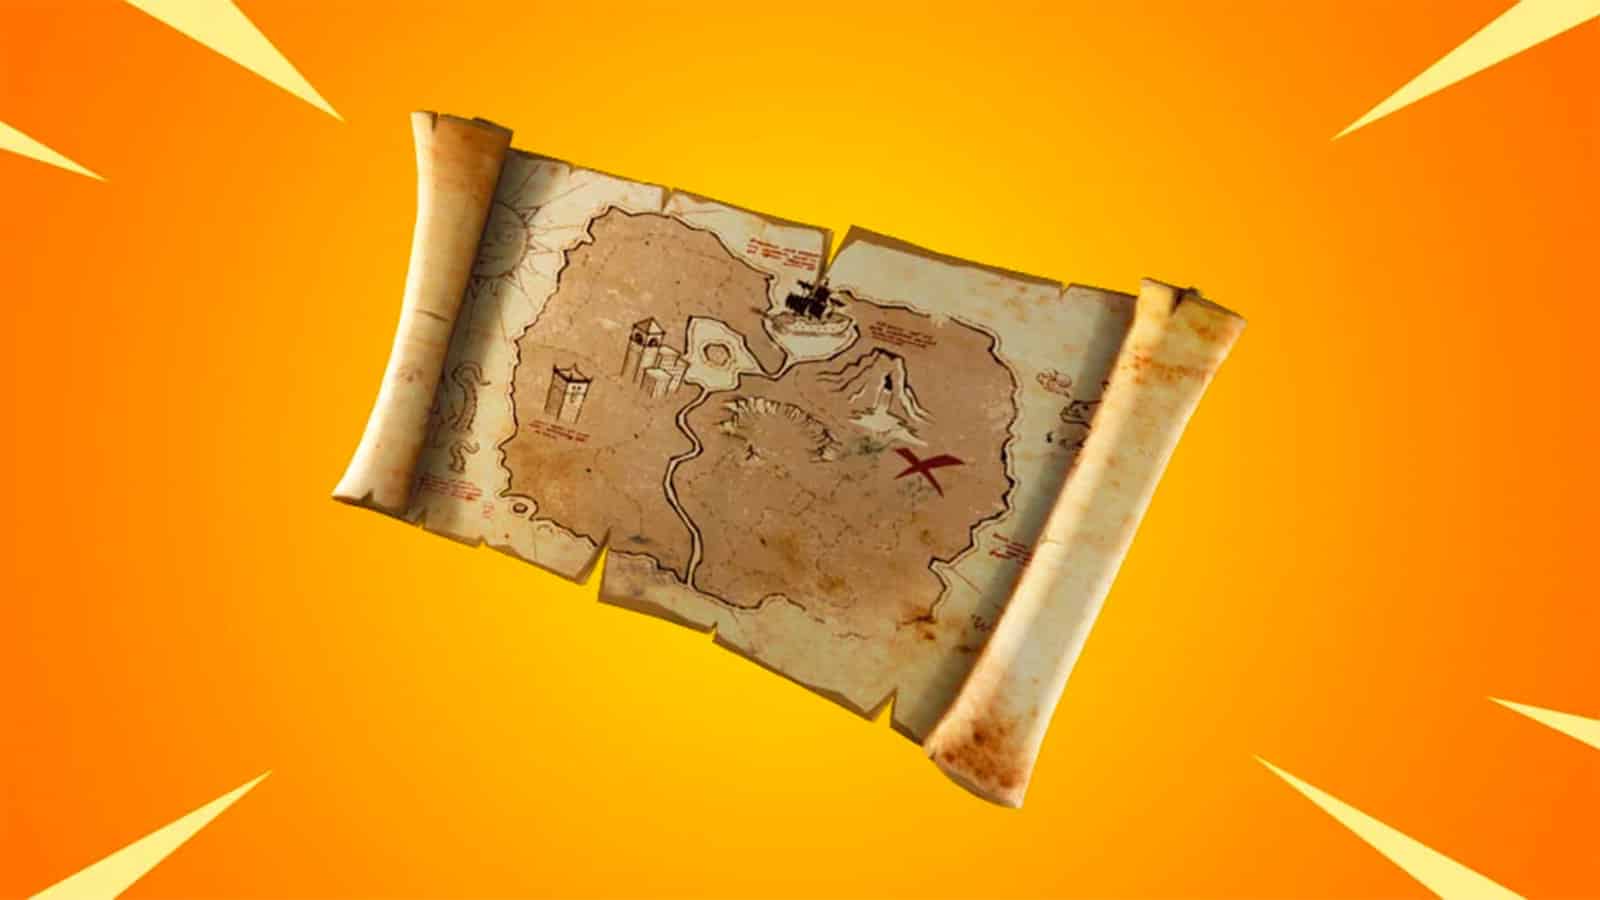 A Buried Treasure Map in the Fortnite 19.30 update